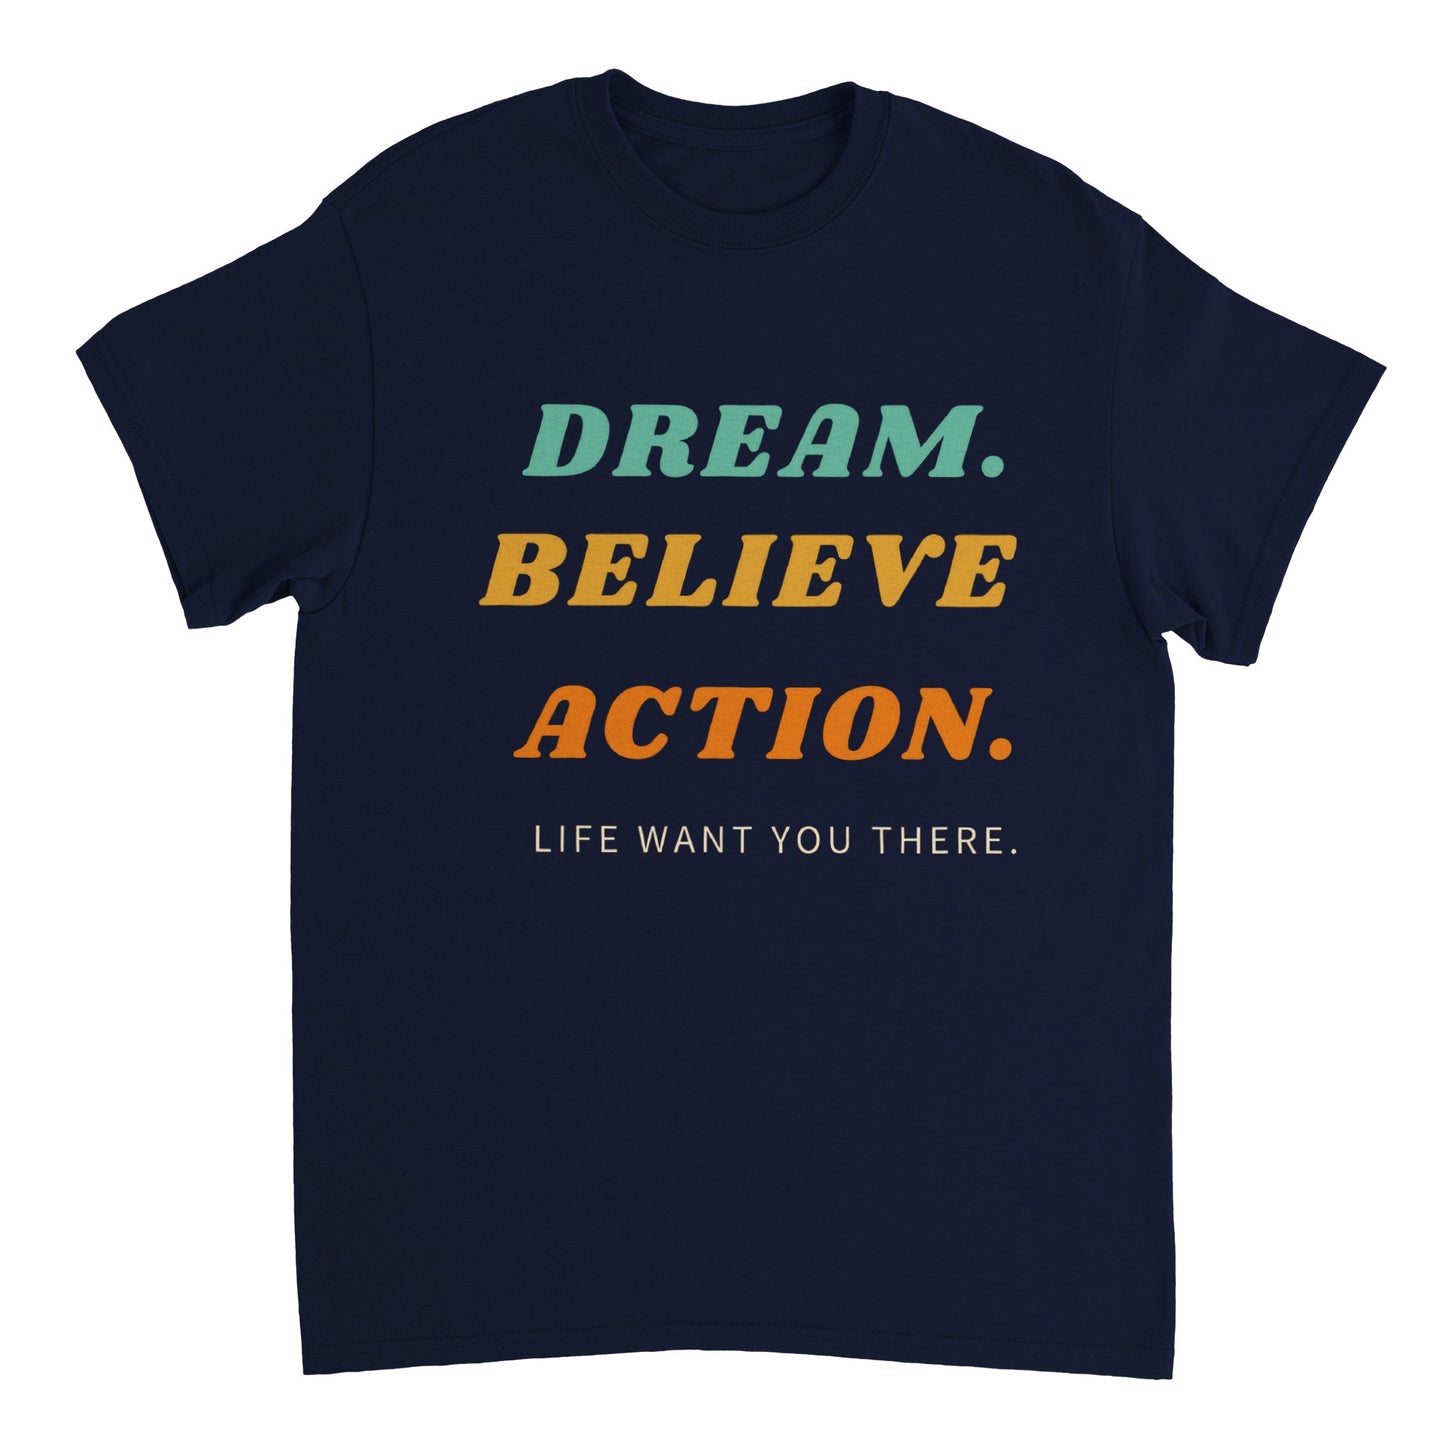 DREAM, BELIEVE,ACTION - T-SHIRT